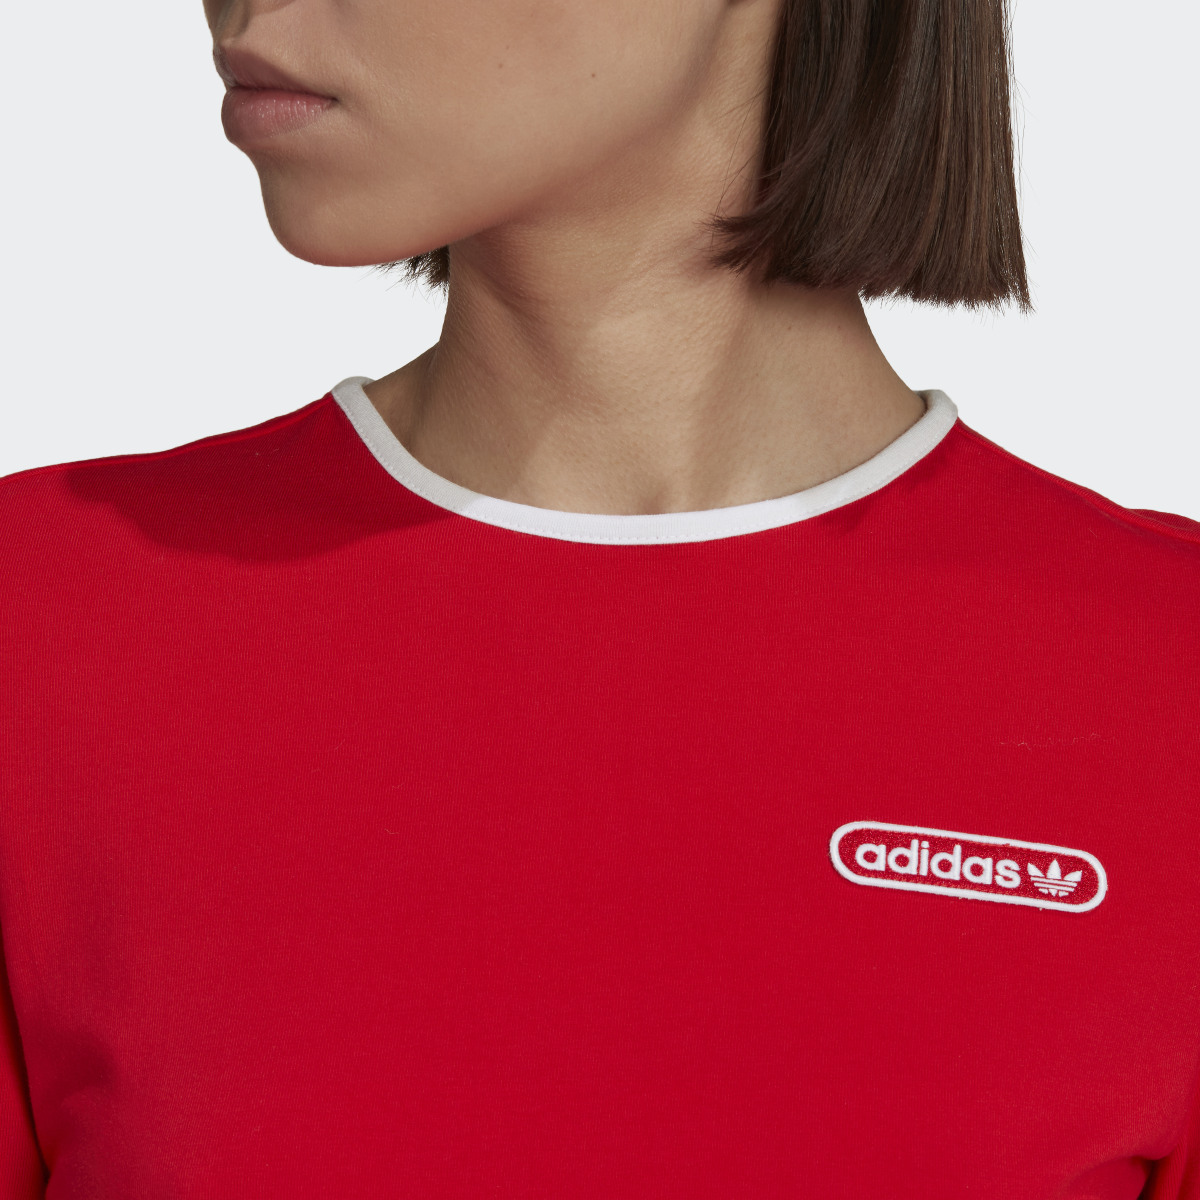 Adidas T-shirt Crop with Binding Details. 6